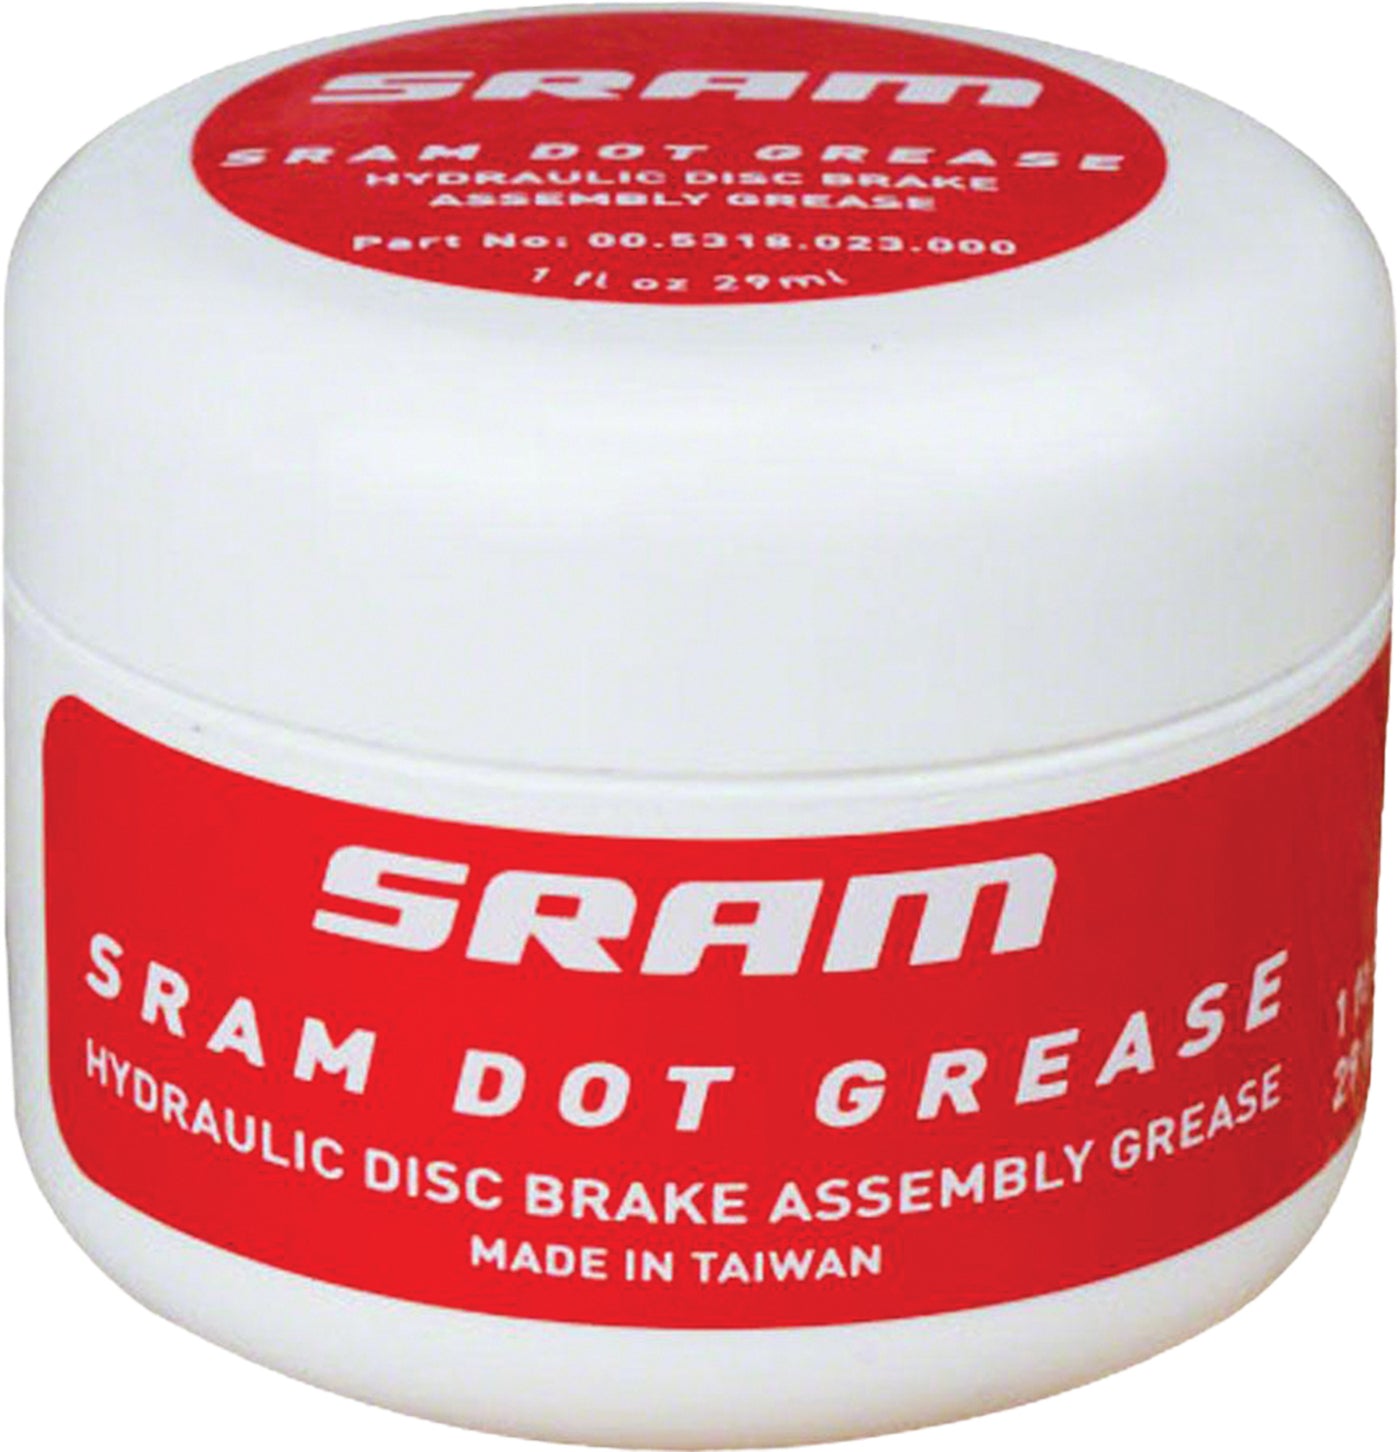 SRAM DOT Assmbly Grease